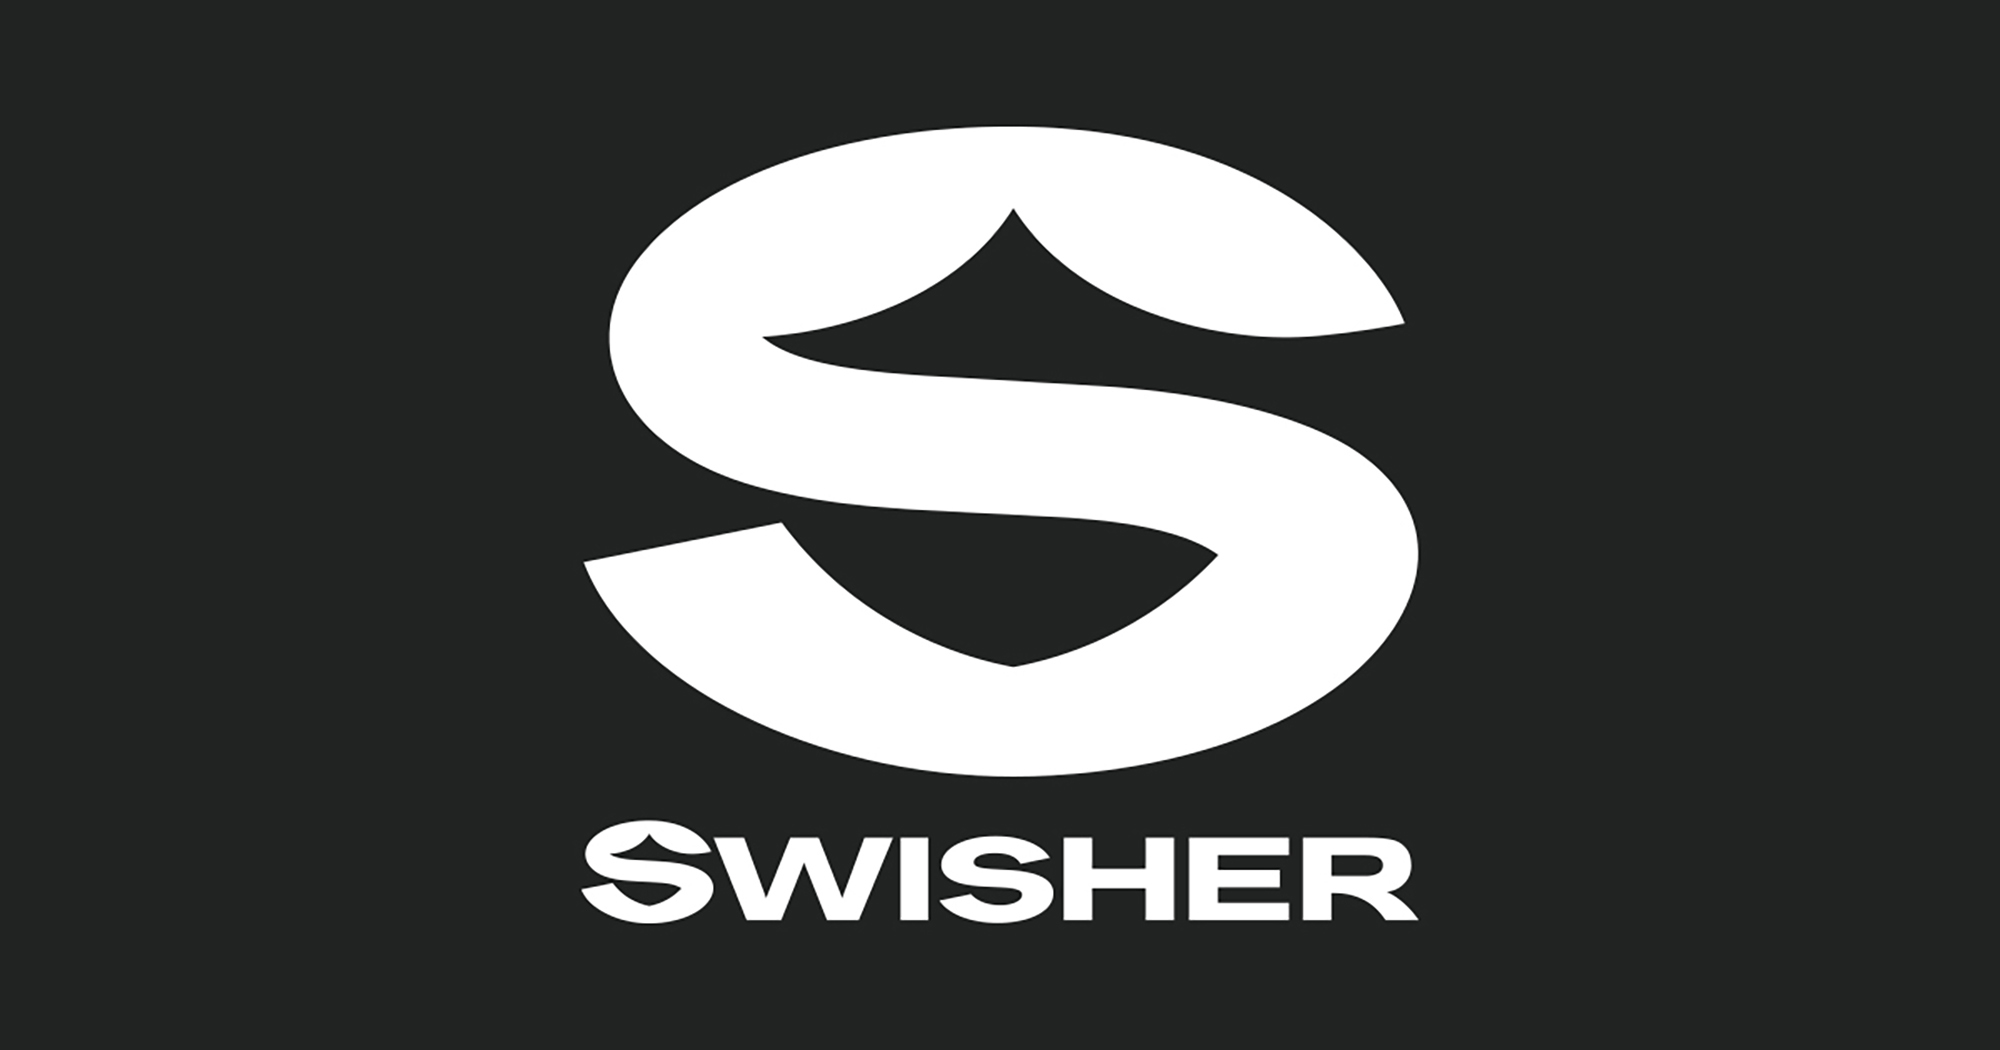 The new Swisher logo.